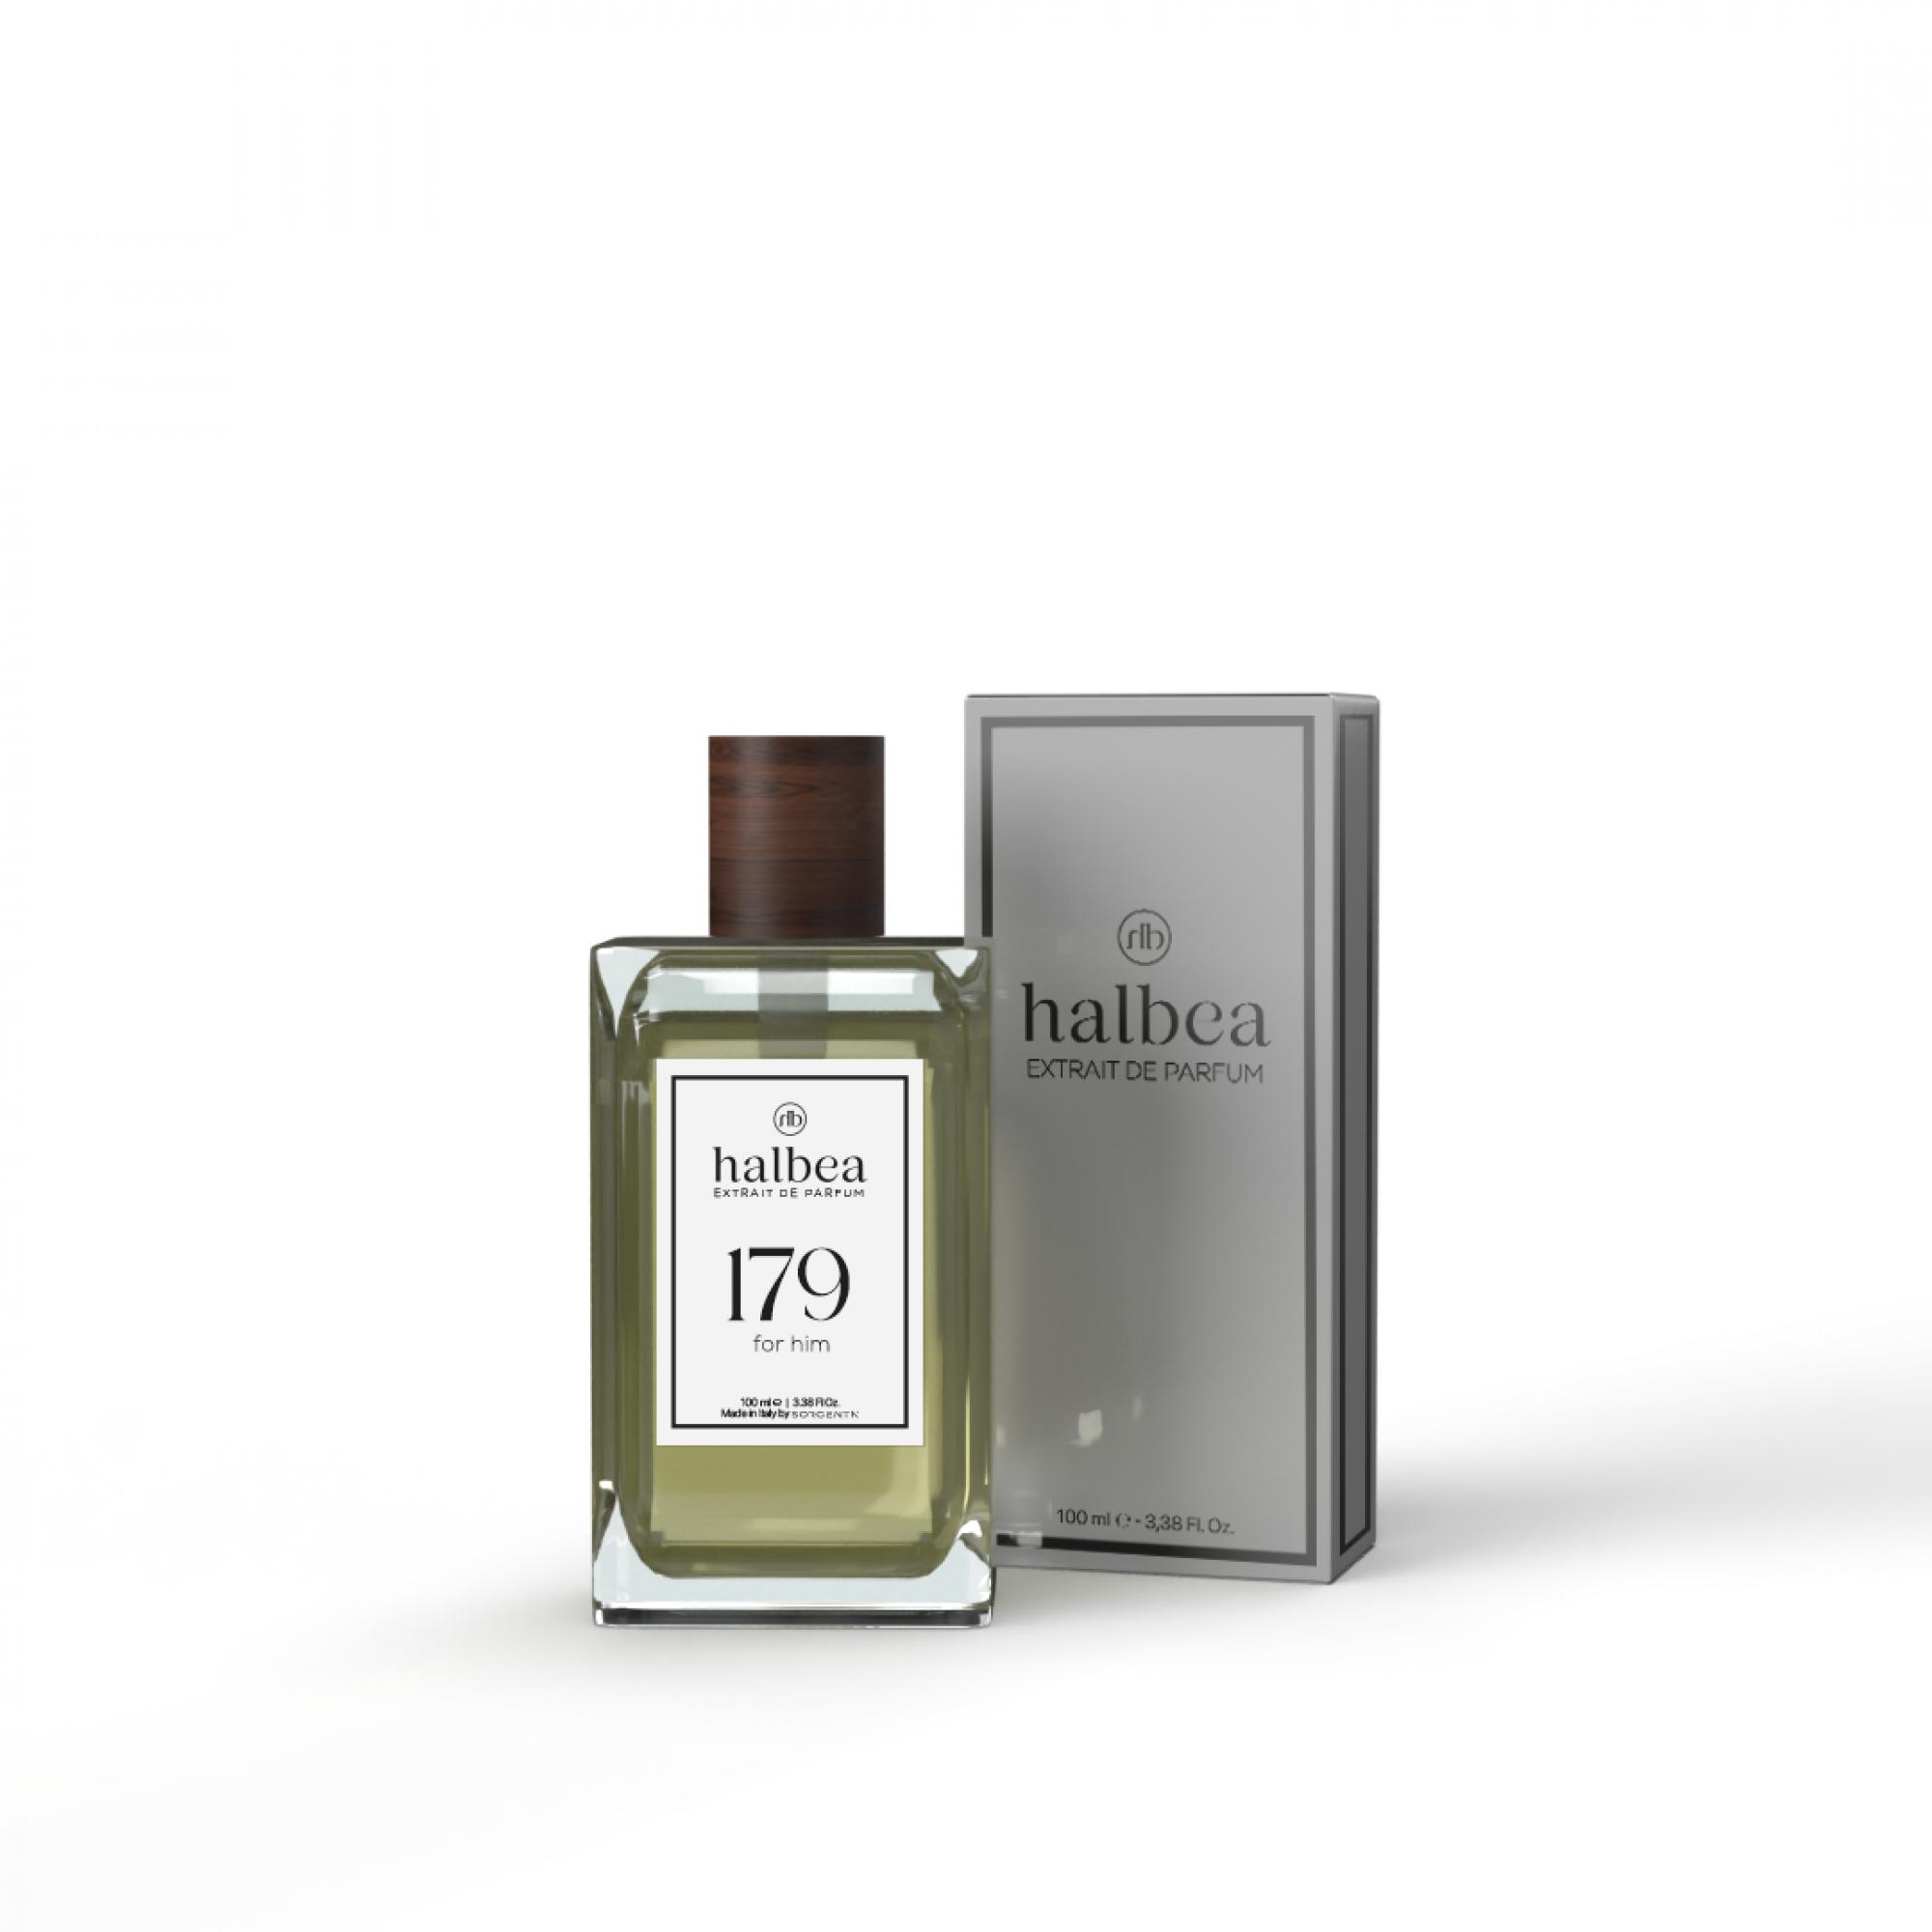 Halbea Parfum Nr. 179 insp. by Paco Rabanne Phantom Sorgenta Duftzwillinge 100ml